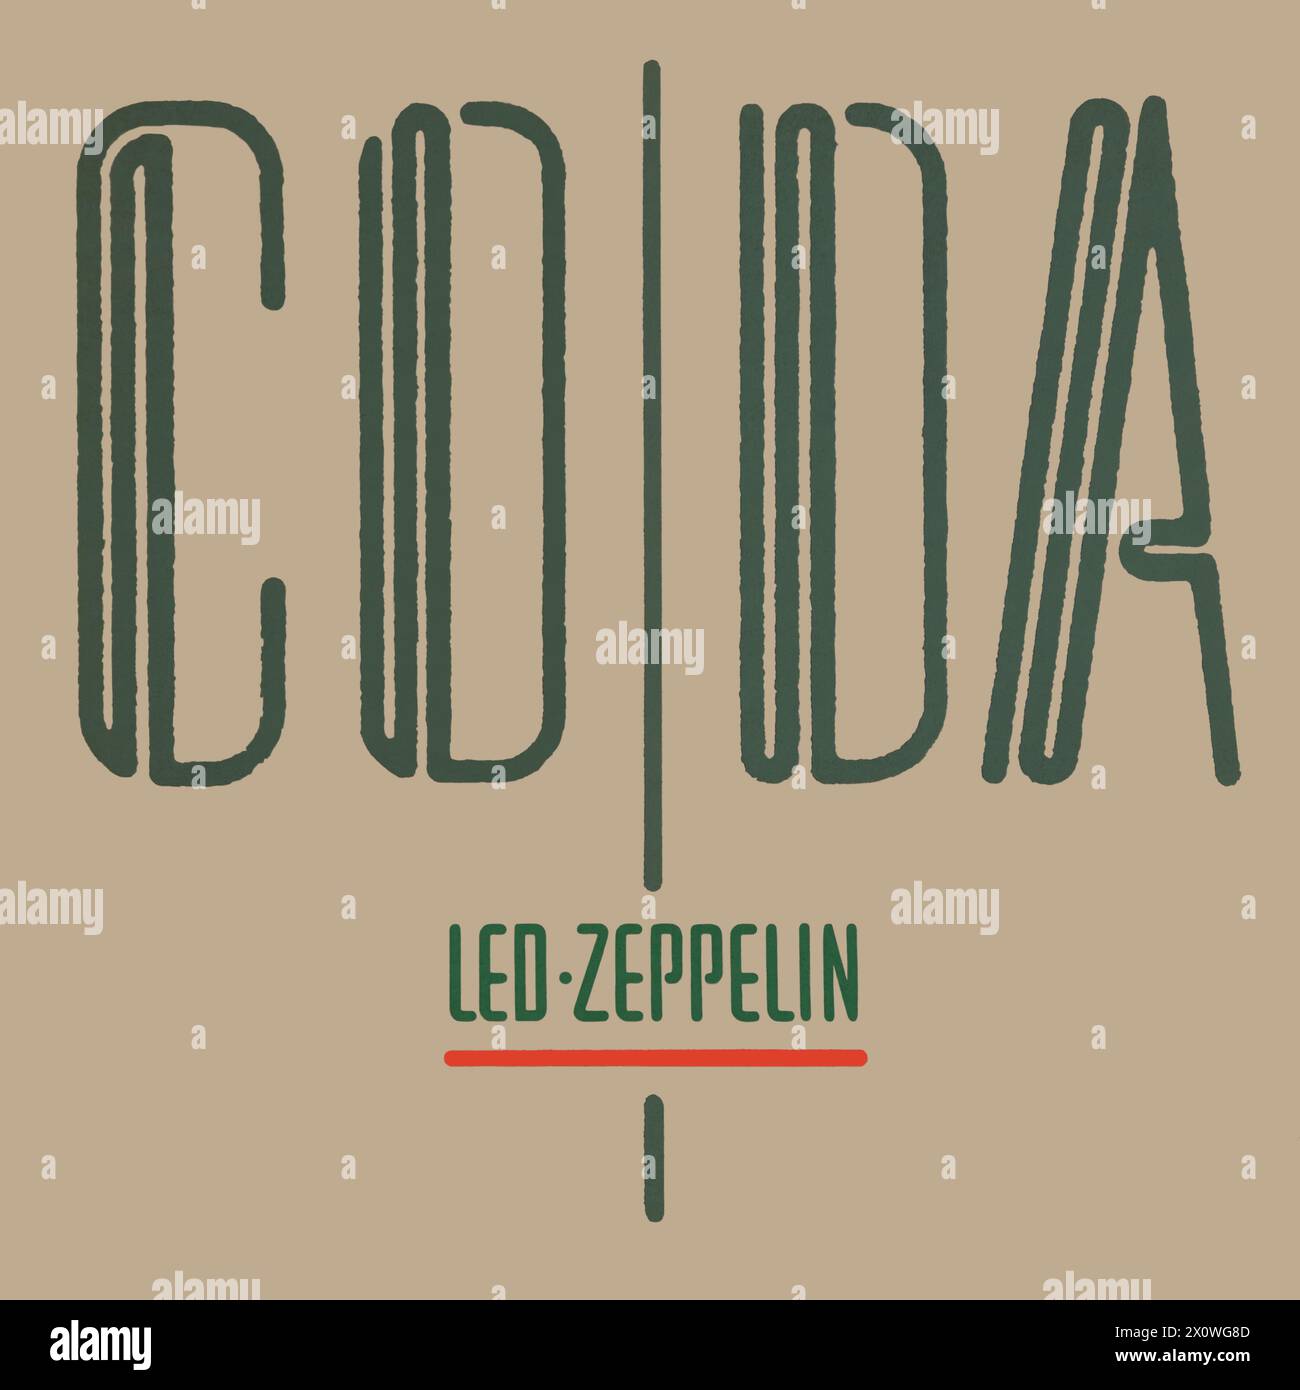 Led Zeppelin - original vinyl album cover - Coda - 1982 Stock Photo